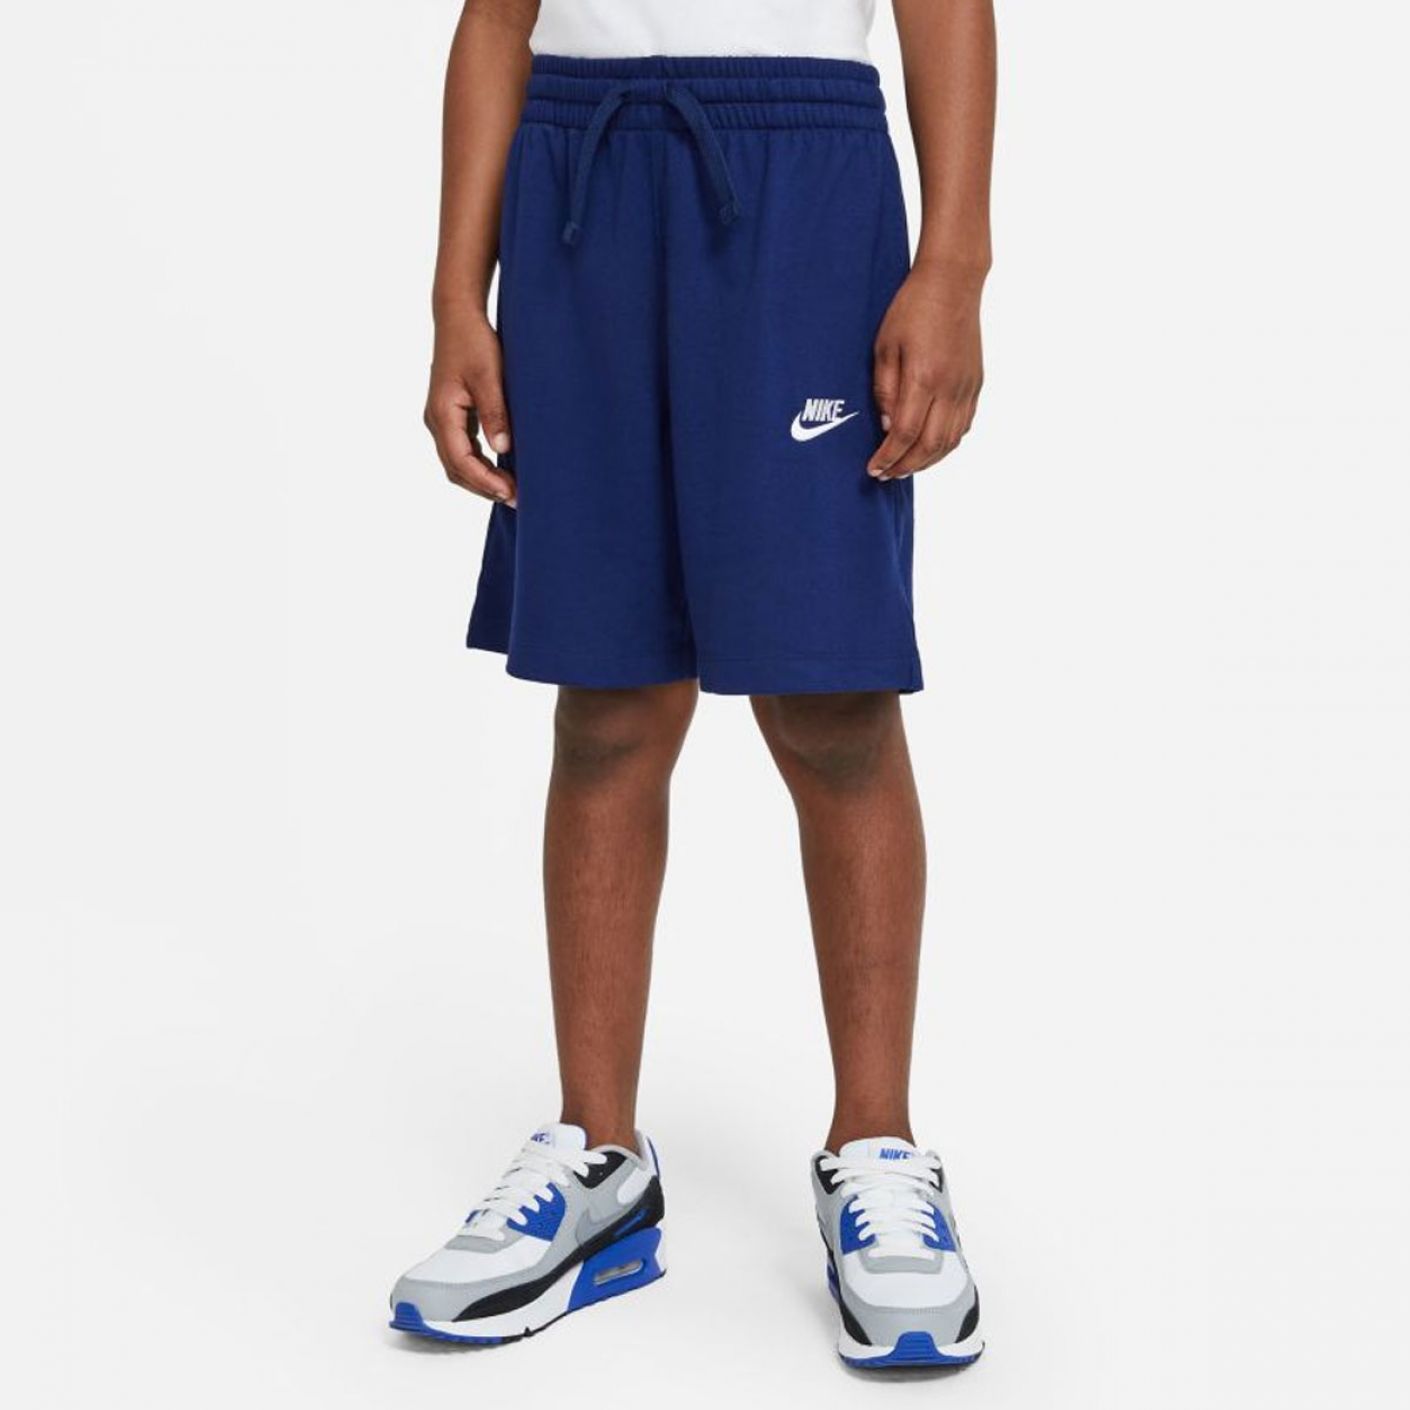 Nike Bermuda Sportswear Blue-White for Kids